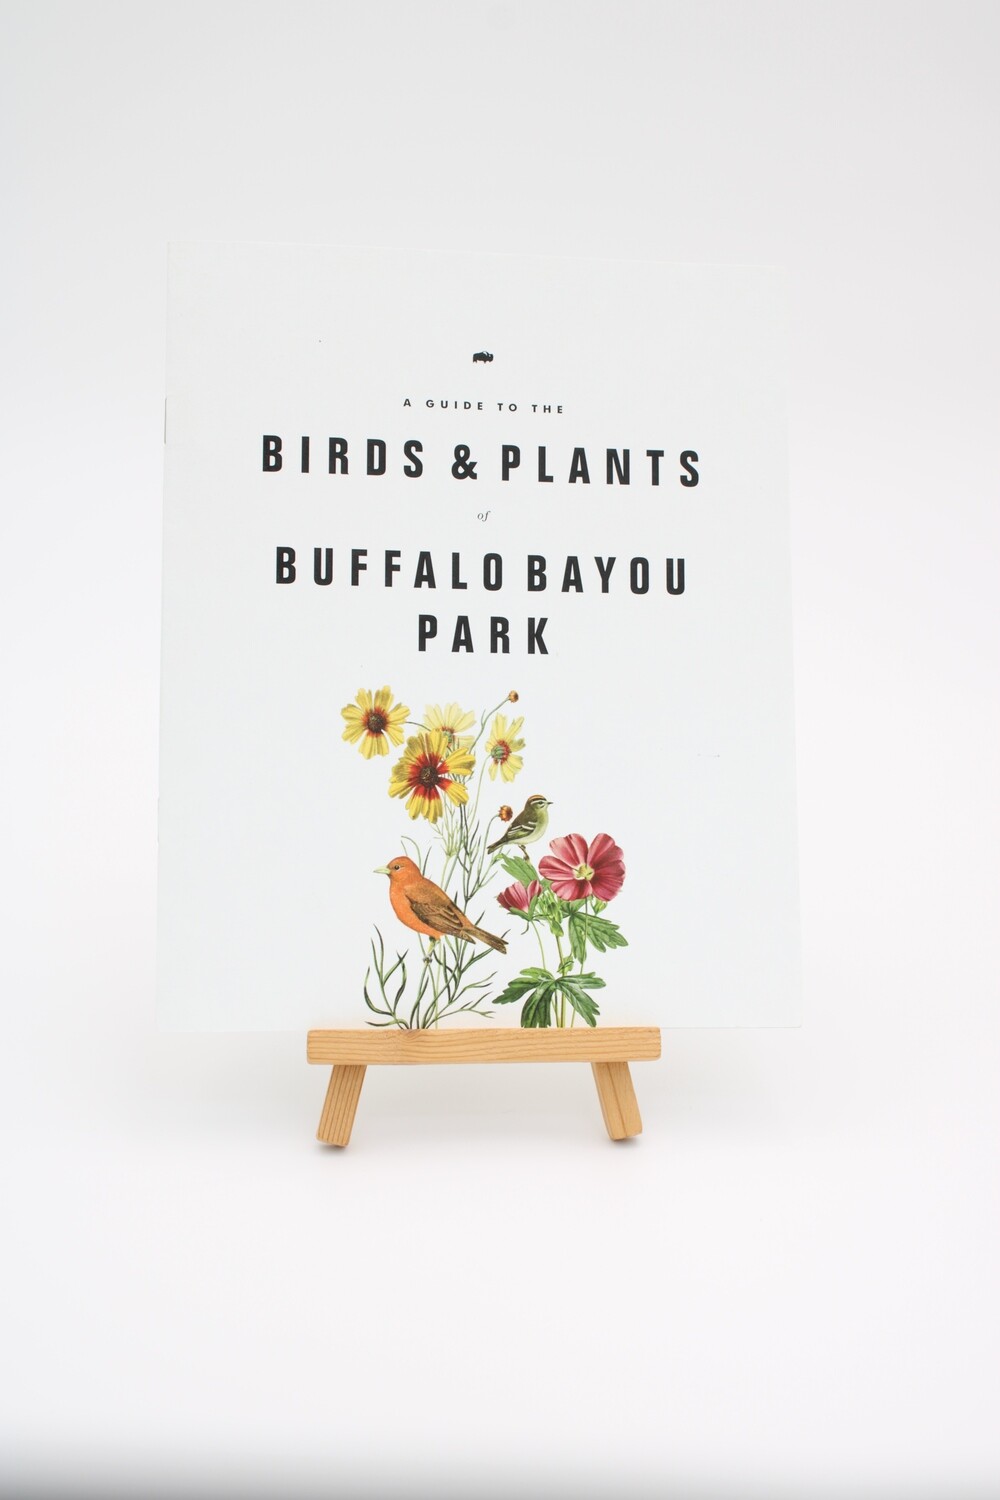 "A Guide to the Birds & Plants of Buffalo Bayou Park"